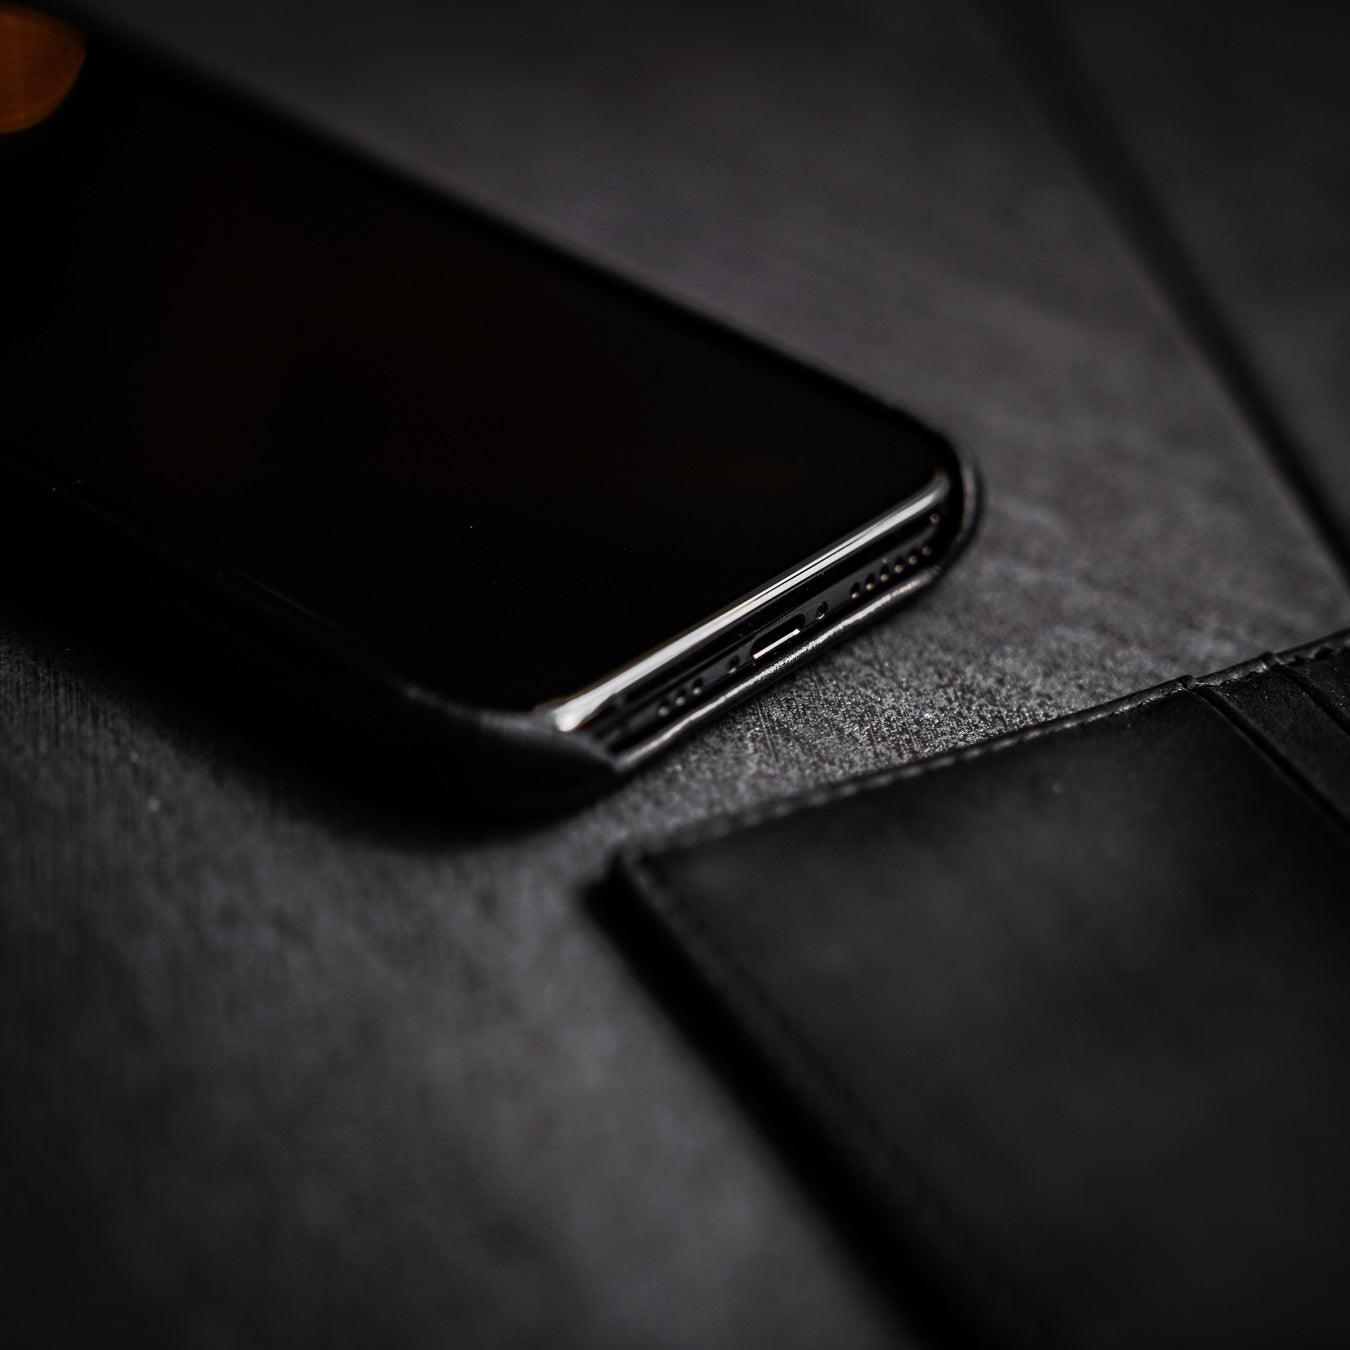 Portfolio iPhone Cases - Black Edition by Bullstrap - The Hammer Sports